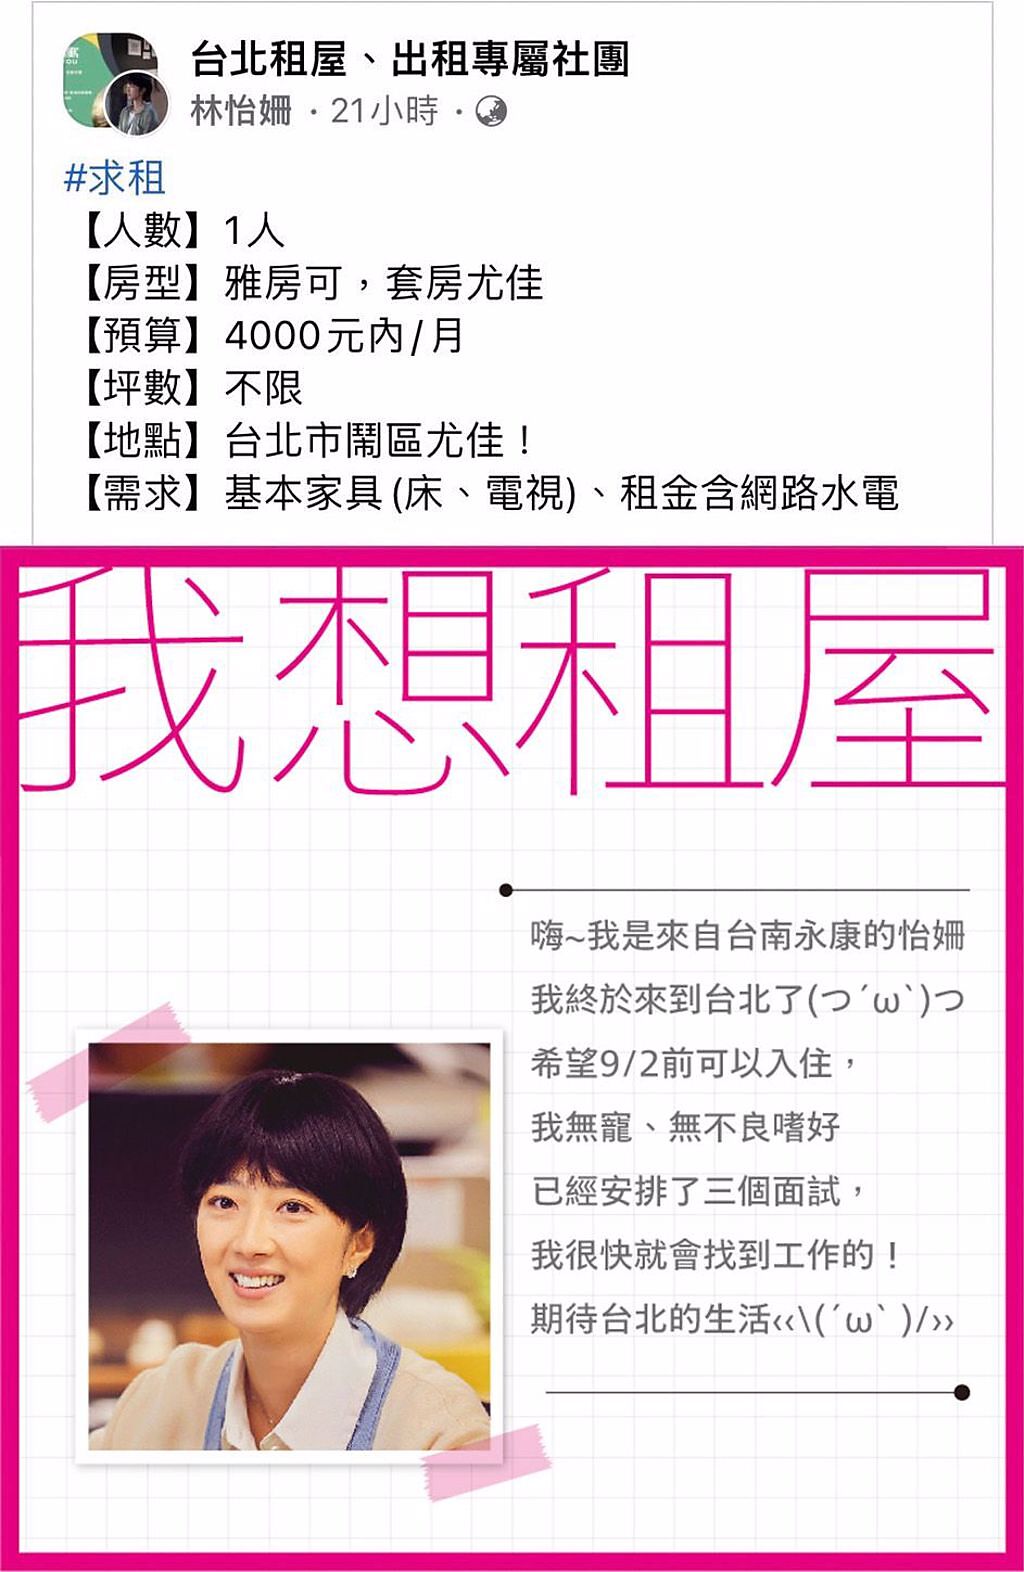 Disney+宣傳台劇《台北女子圖鑑》，但4千元在台北租房的想法引起熱議。（翻攝自Disney+臉書）